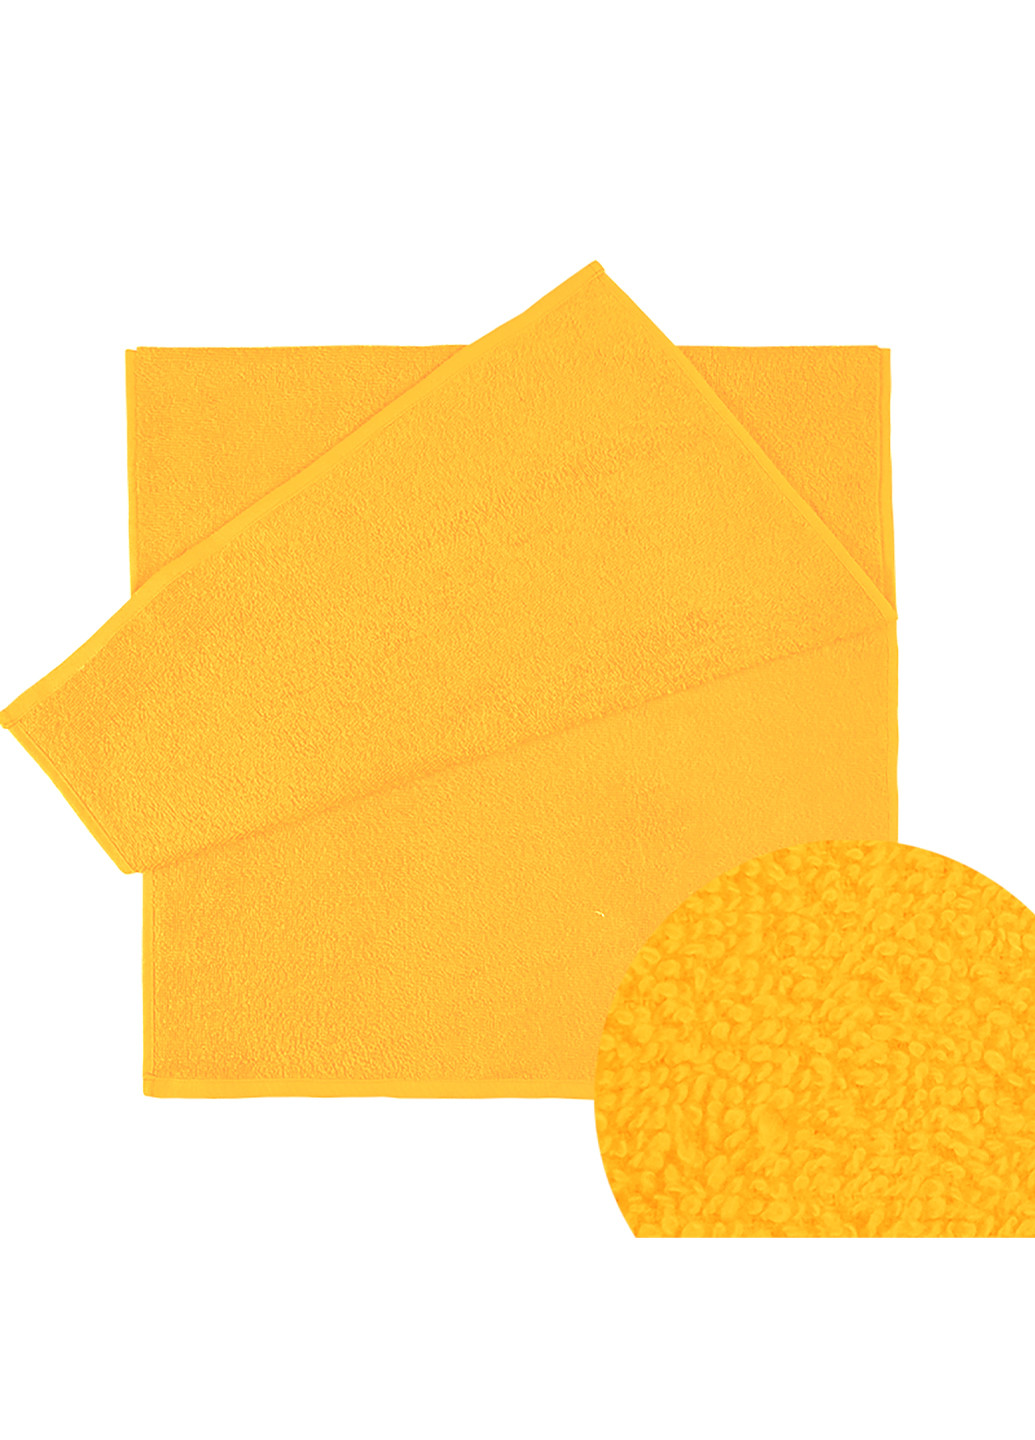 Ярослав полотенце яр-400 махровое 50х90 однотонный желтый производство - Украина